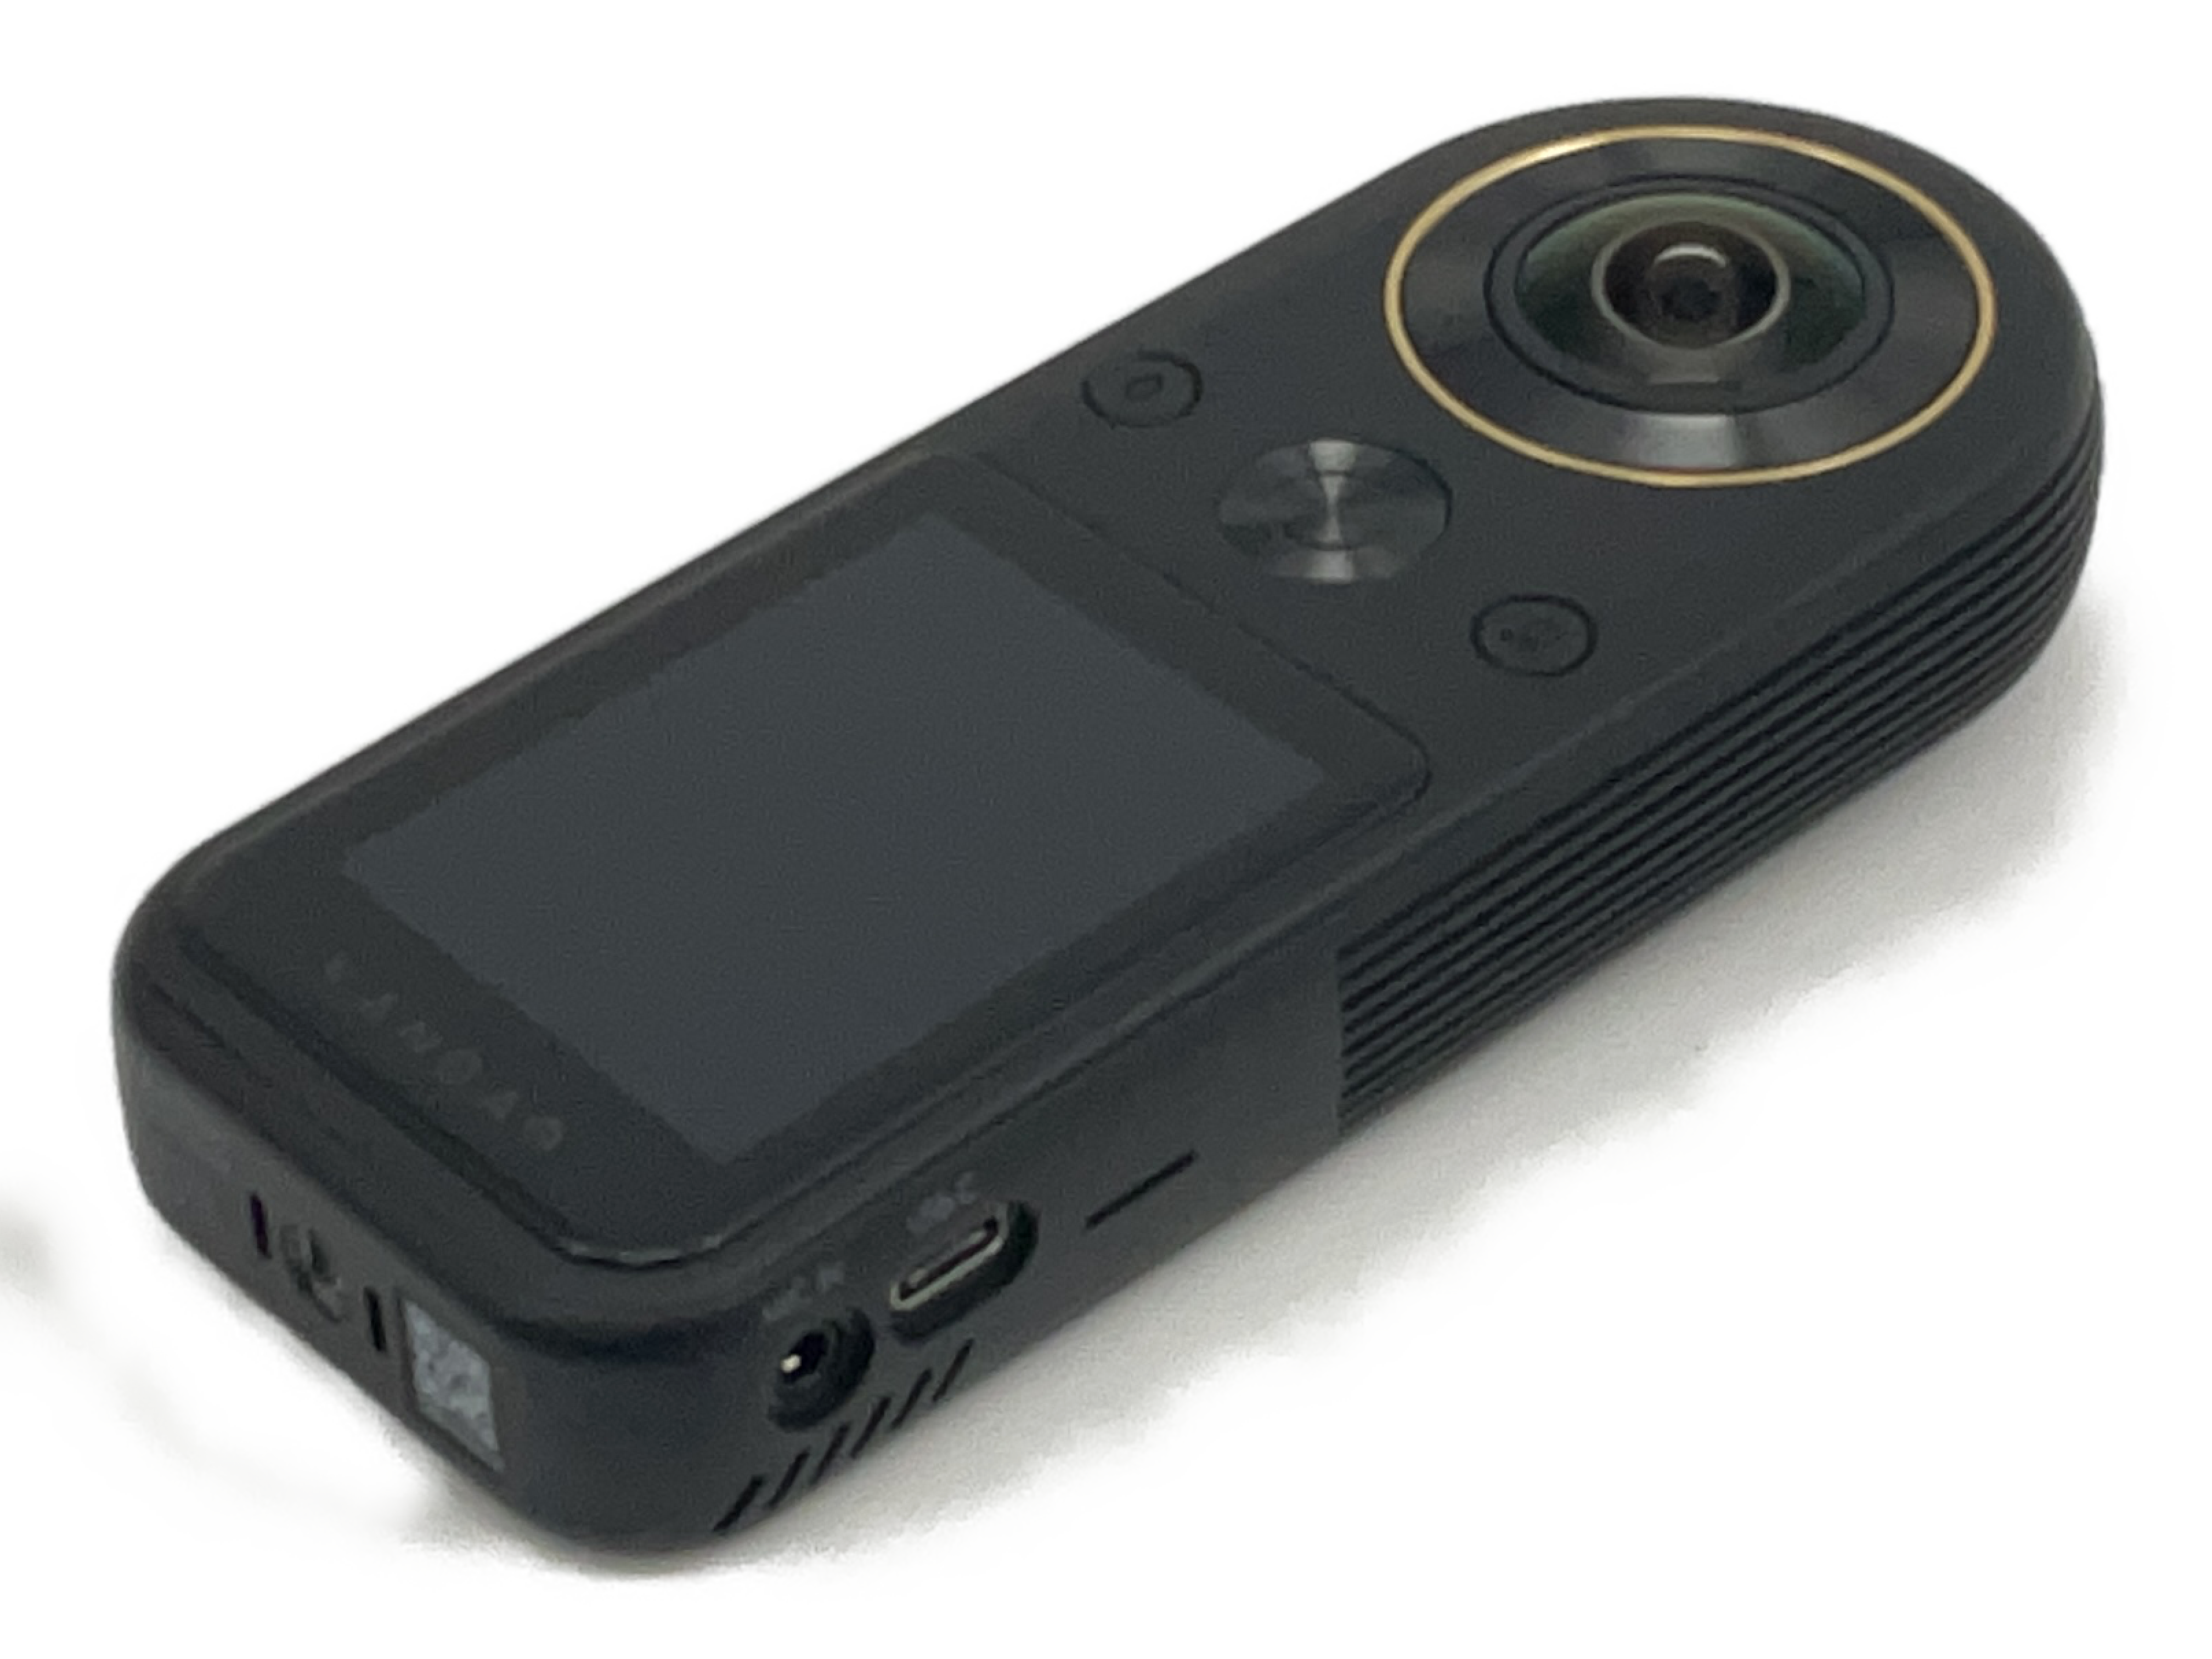 Qoocam 8k 純正スマホ装着可能自撮り棒撮影セット デジタルカメラ パンダスタジオ レンタル公式サイト